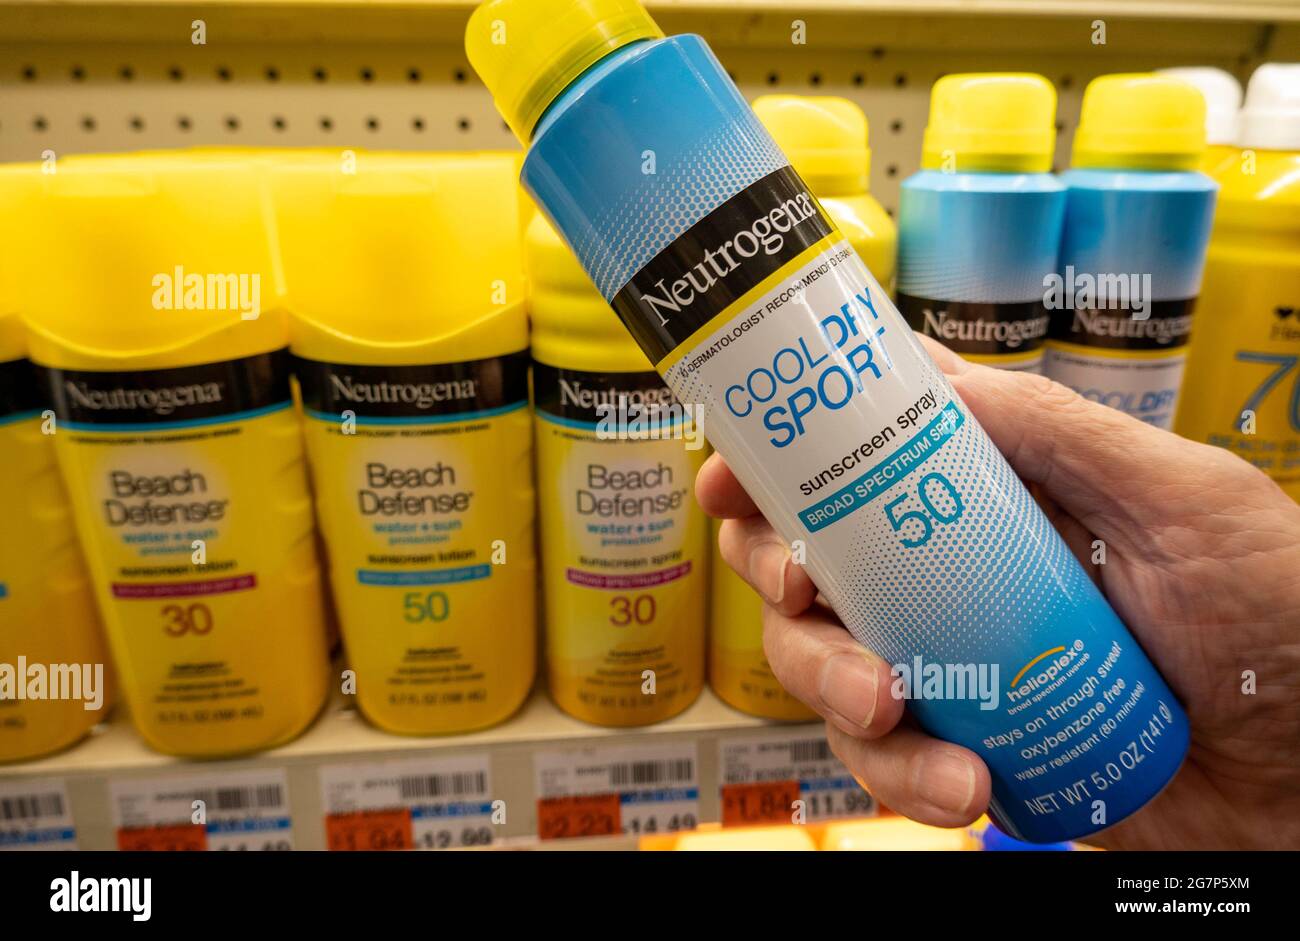 Neutrogena sunscreen is a product of Johnson & Johnson,, USA Stock Photo